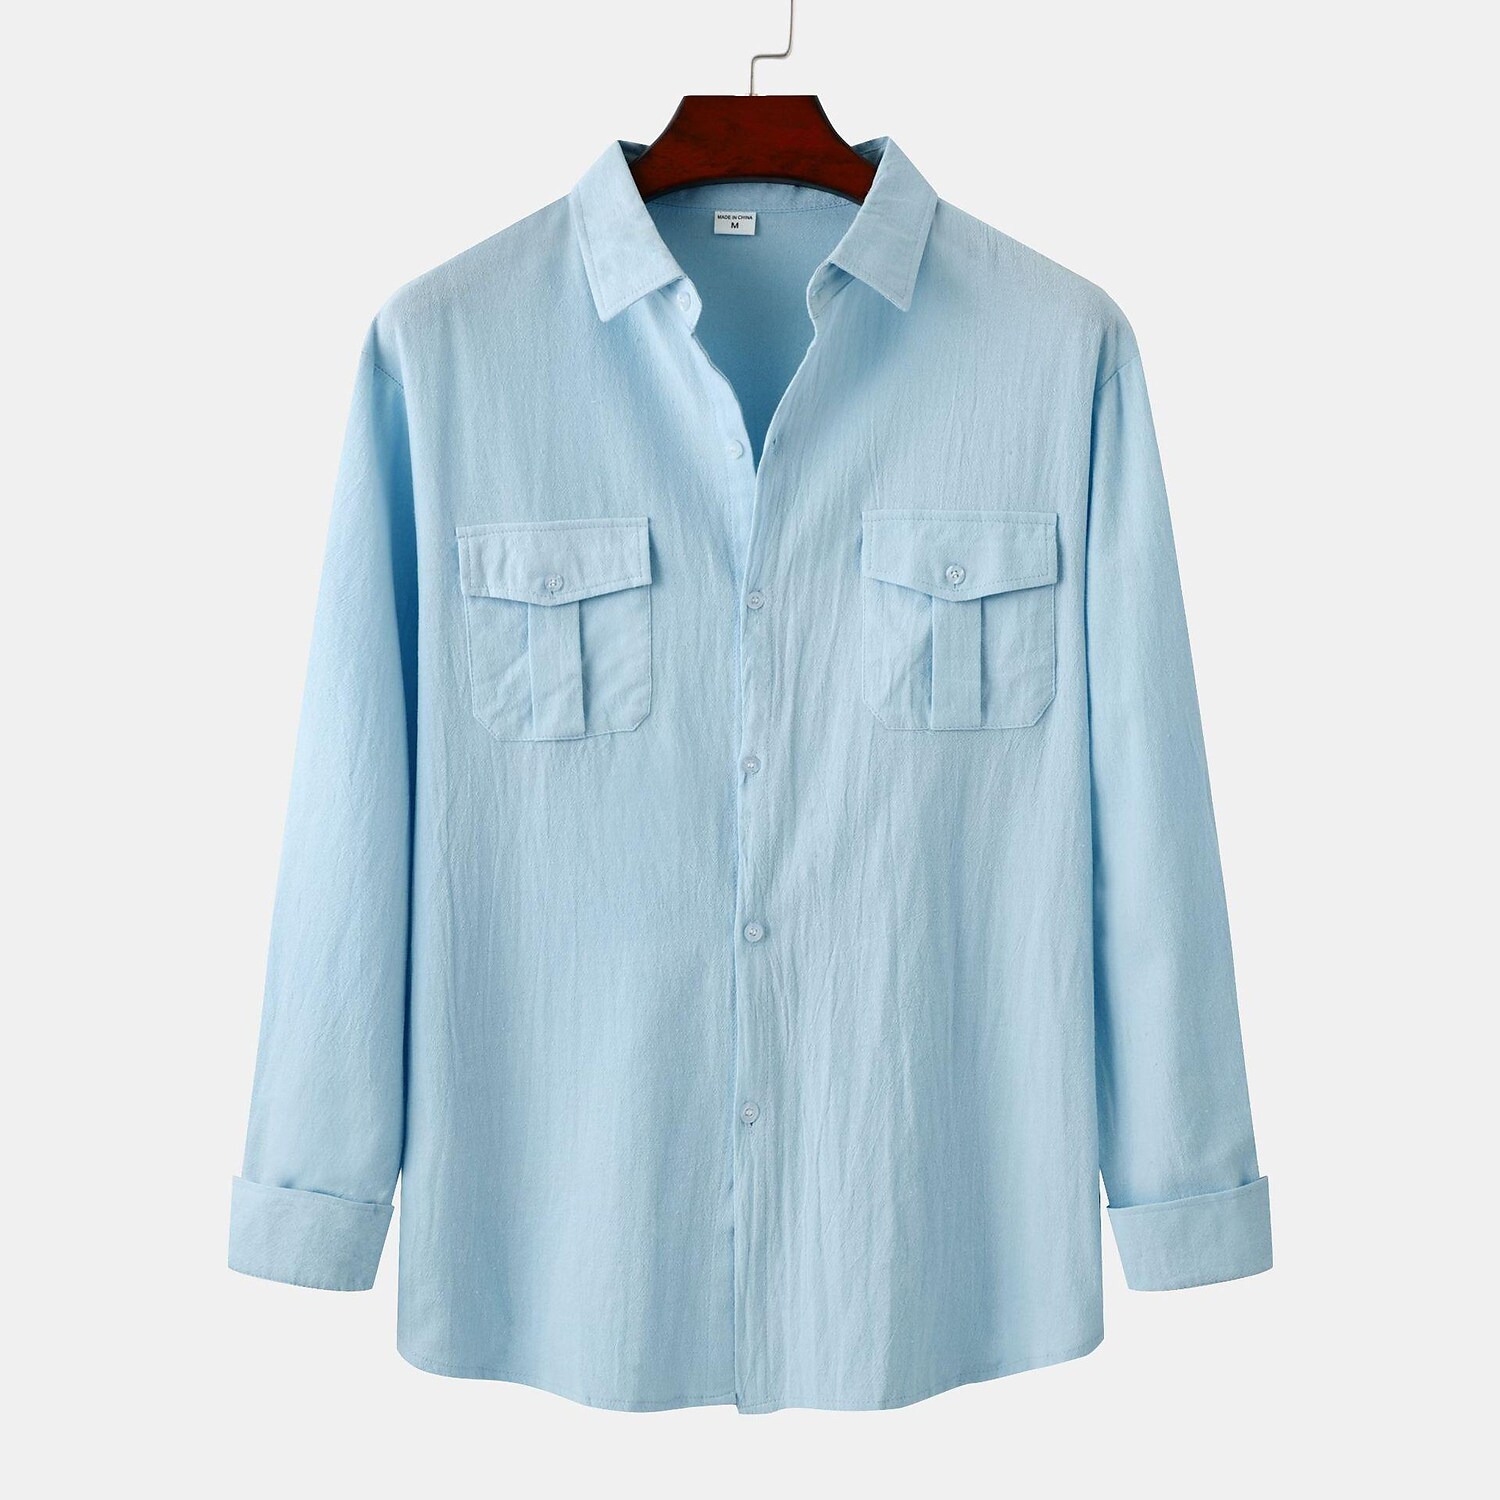 Rogoman Men's Double Pocket Cotton and Linen Solid Color Long Sleeve Shirt